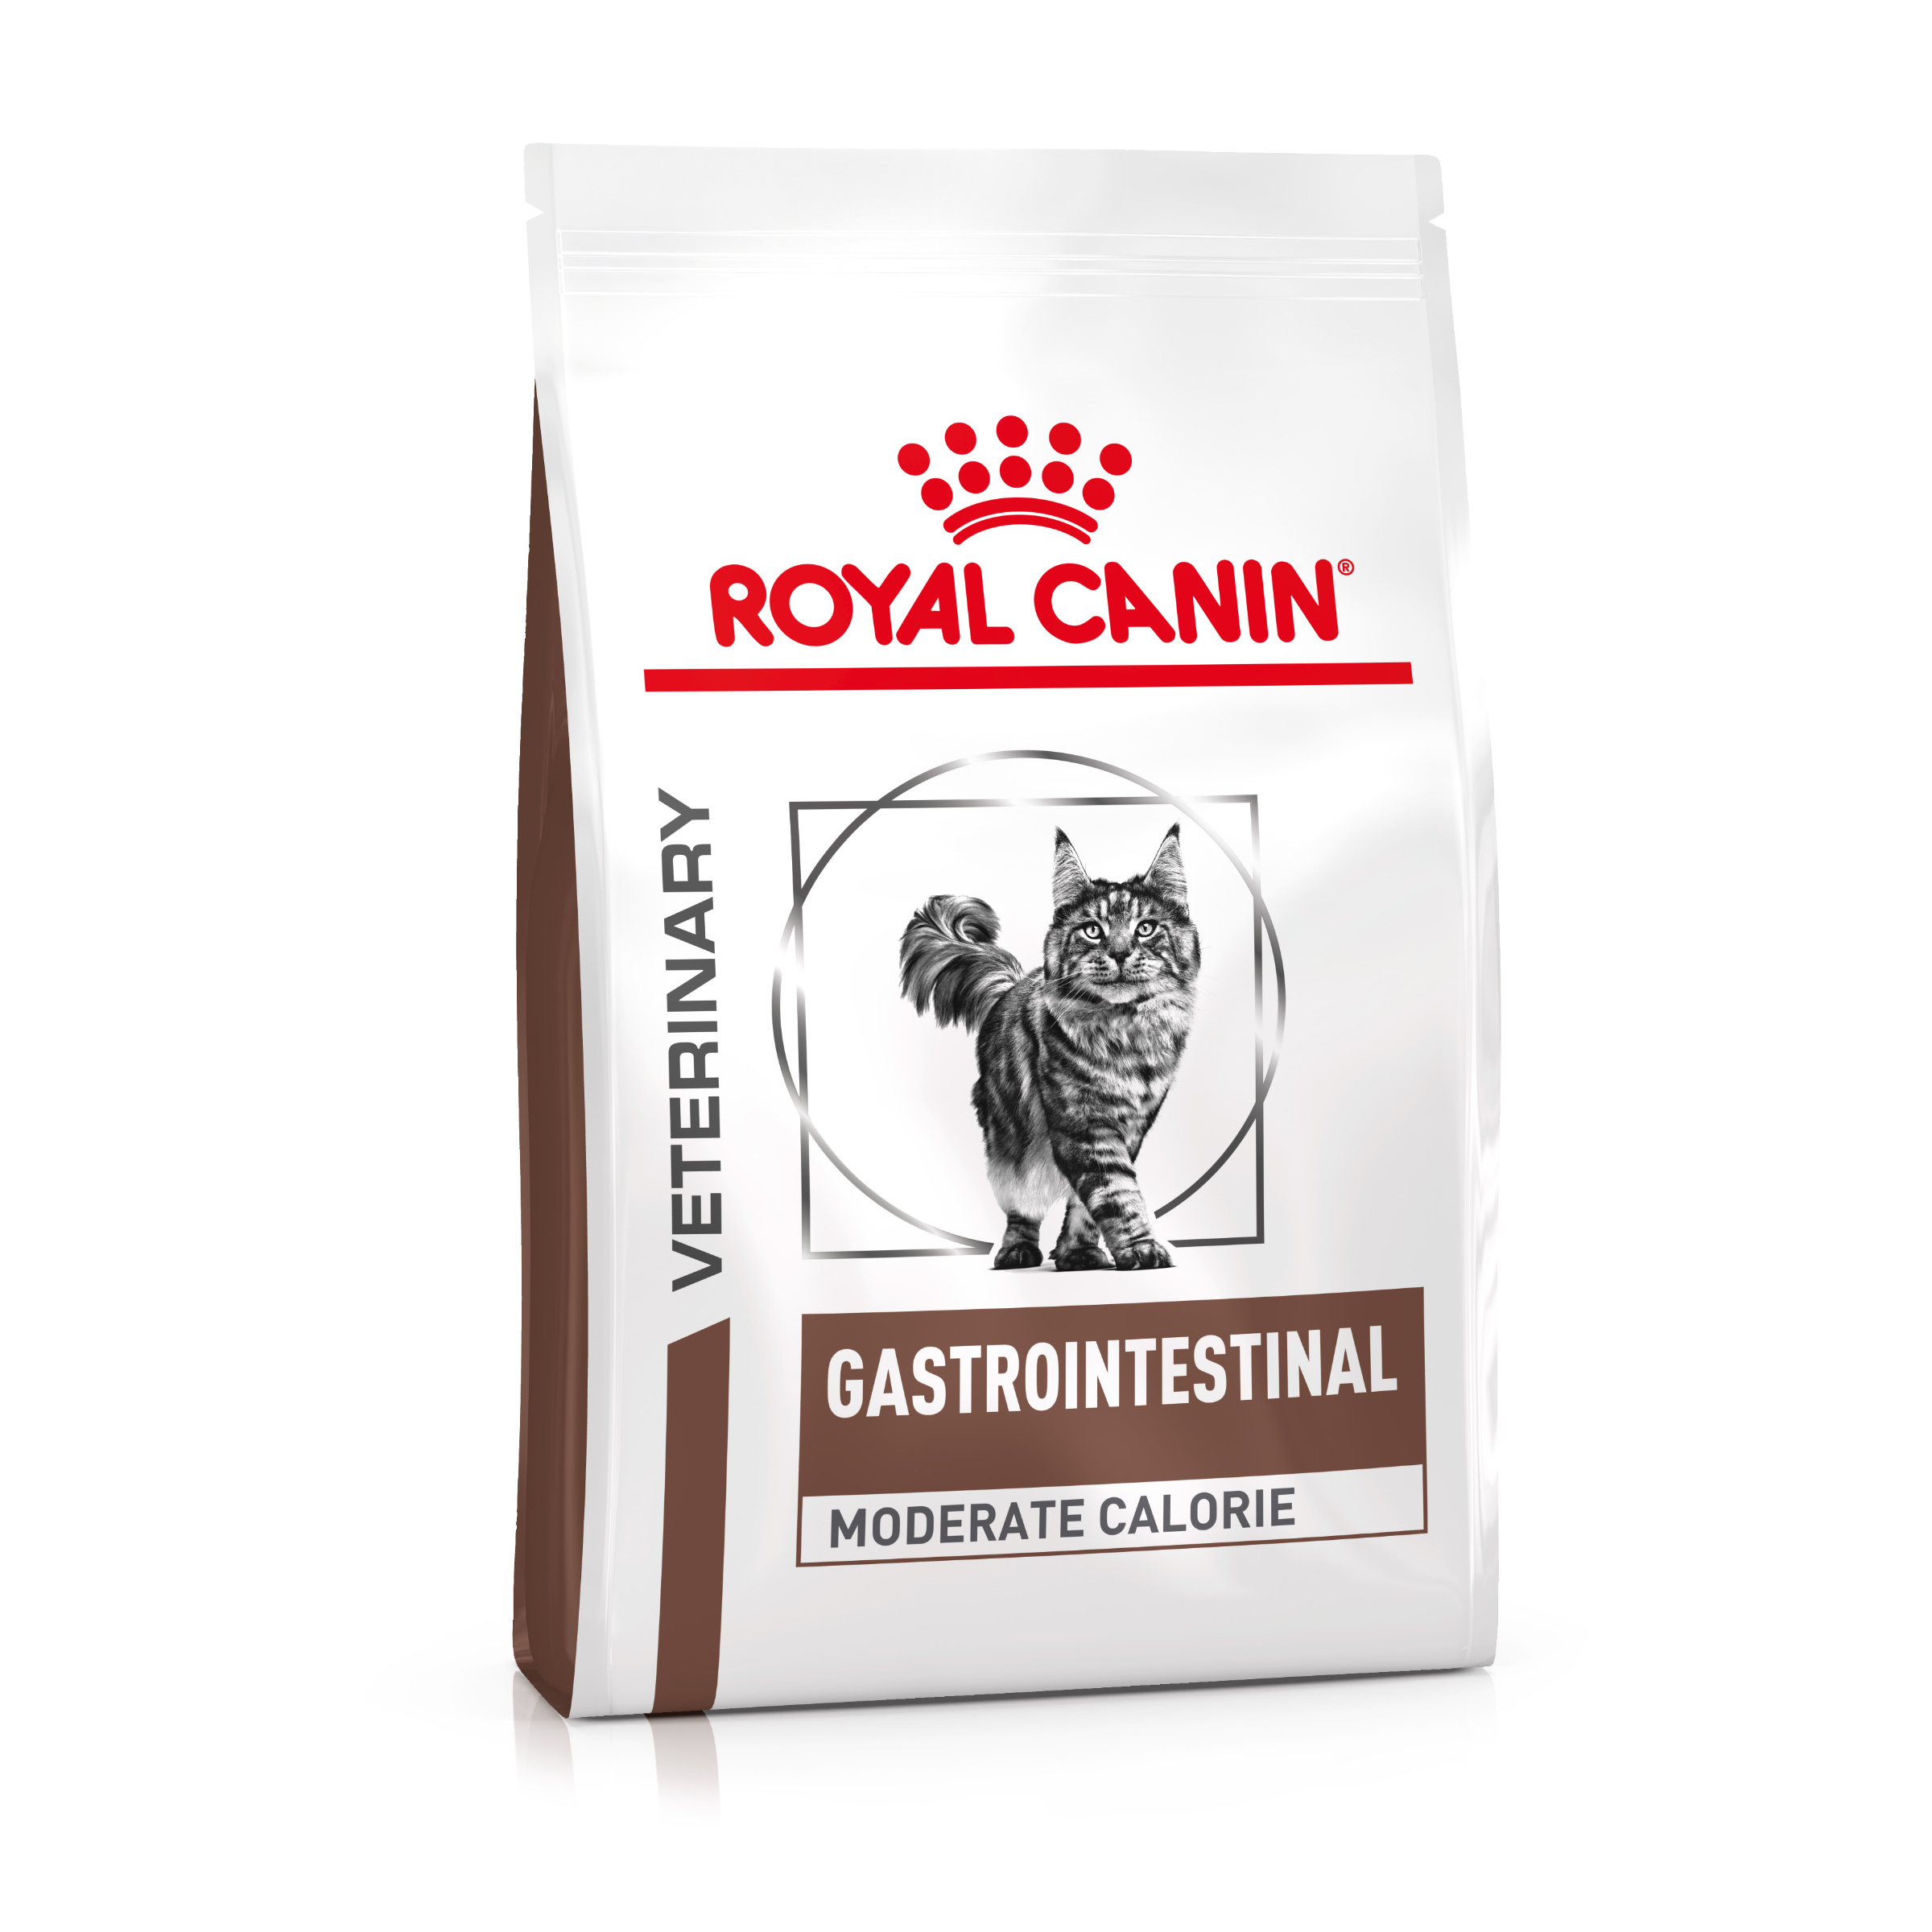 ROYAL CANIN Veterinary GASTROINTESTINAL MODERATE CALORIE Trockenfutter für Katzen 400 g (Katze)